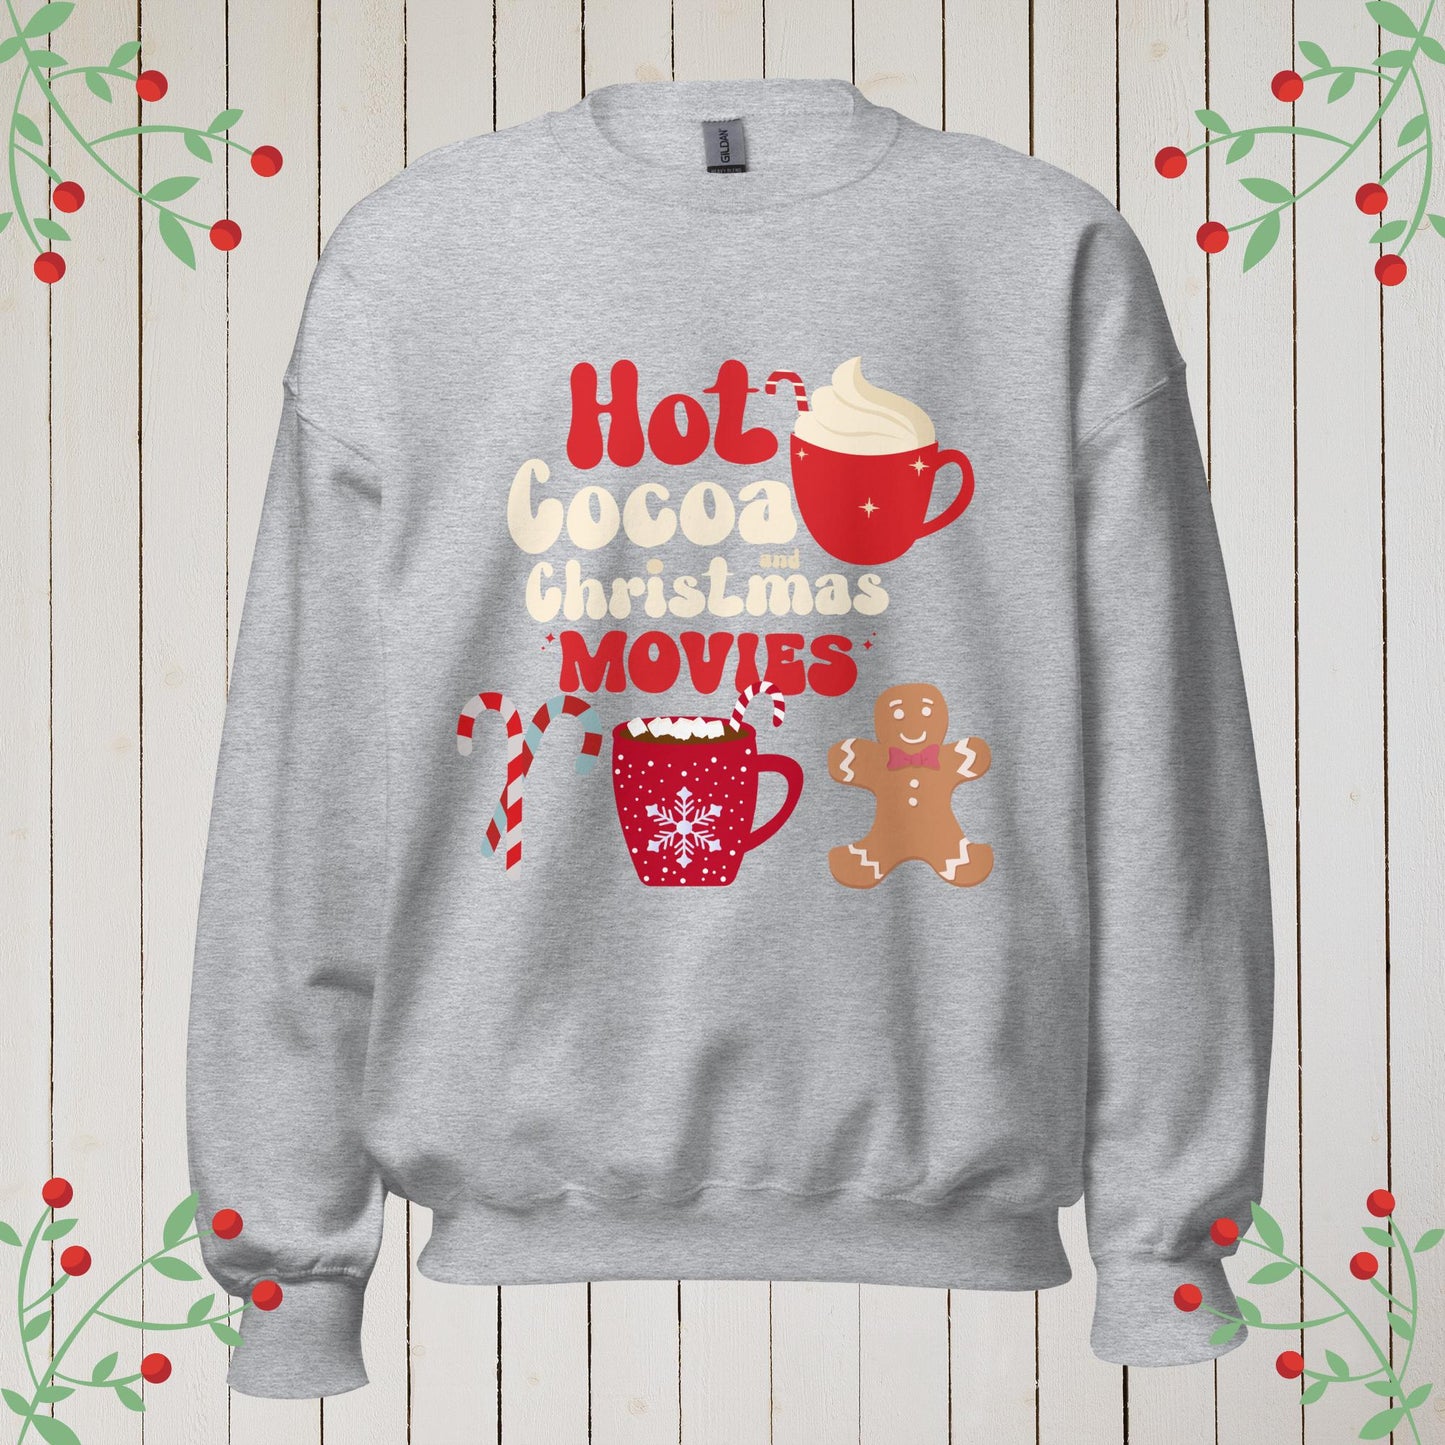 Christmas and Movies Sweatshirt